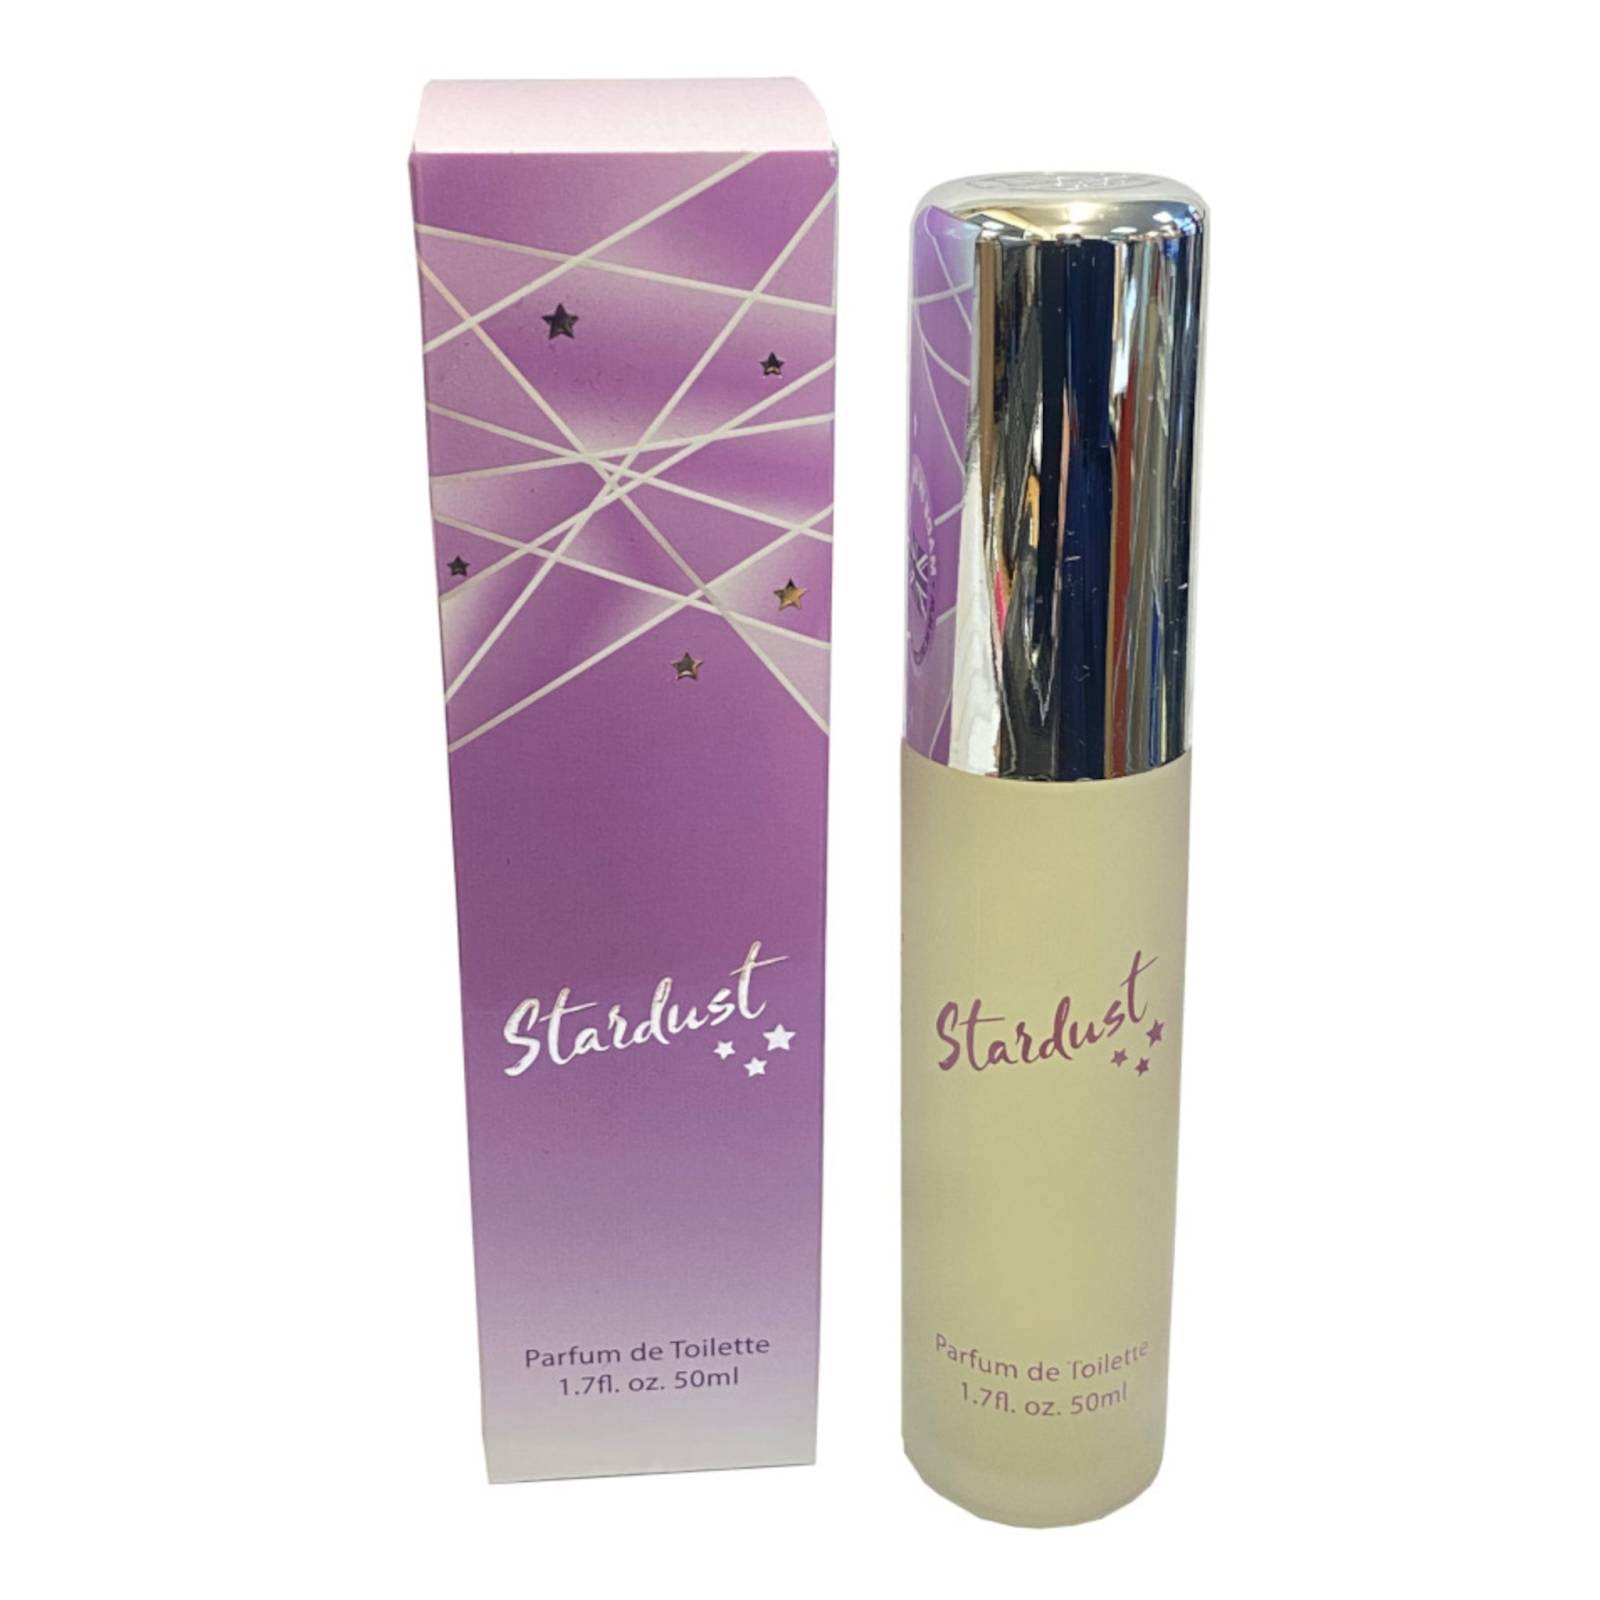 Stardust Milton Lloyd Perfume Fragrance For Women Parfum De Toilette 50ml New